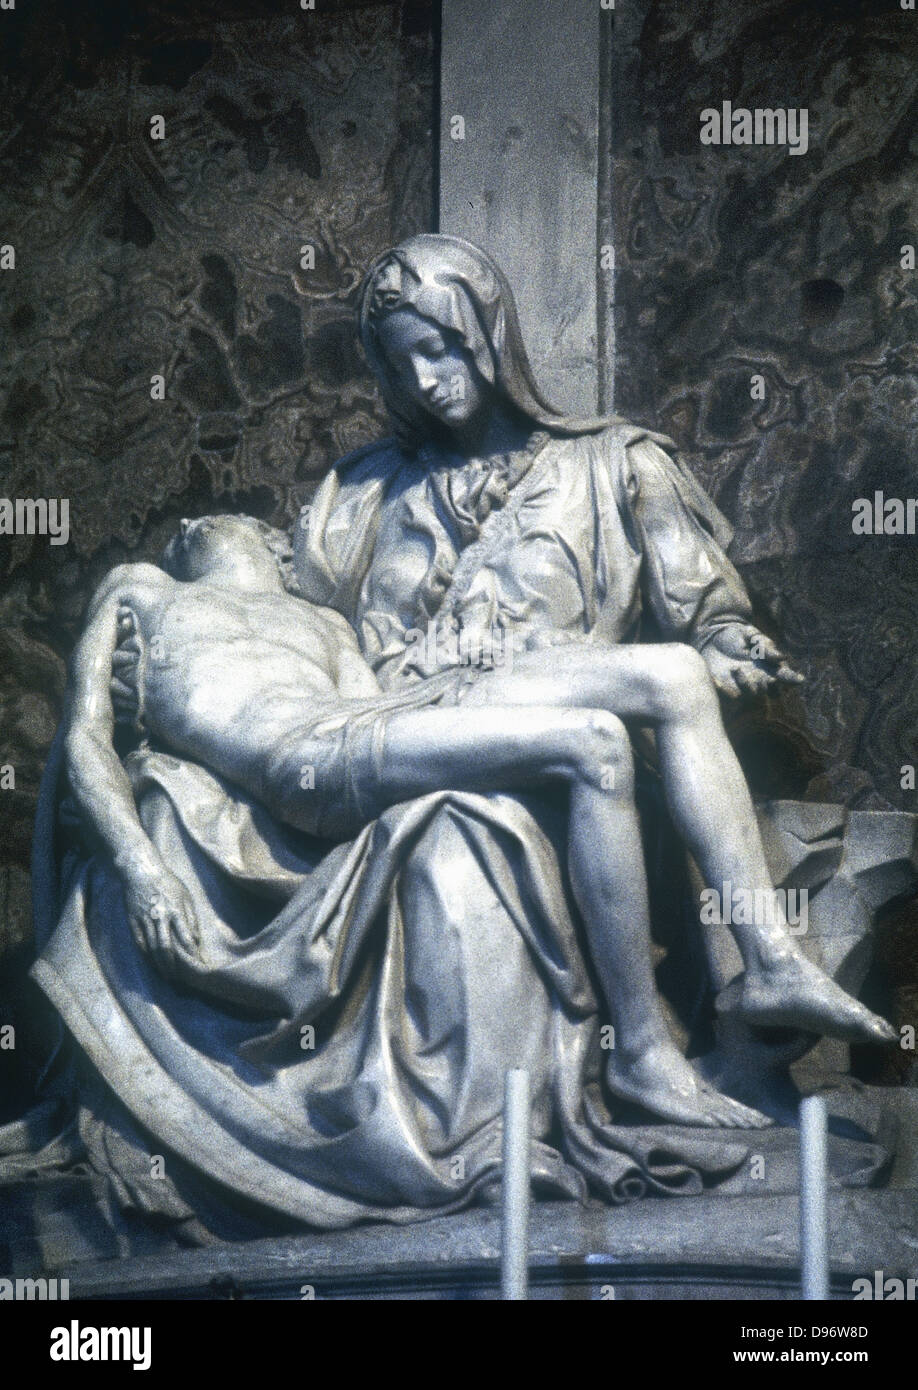 Pieta' (1498-1500). Michelangelo (1475-1564): Marble Sculpture. St Peter's, Rome. Stock Photo